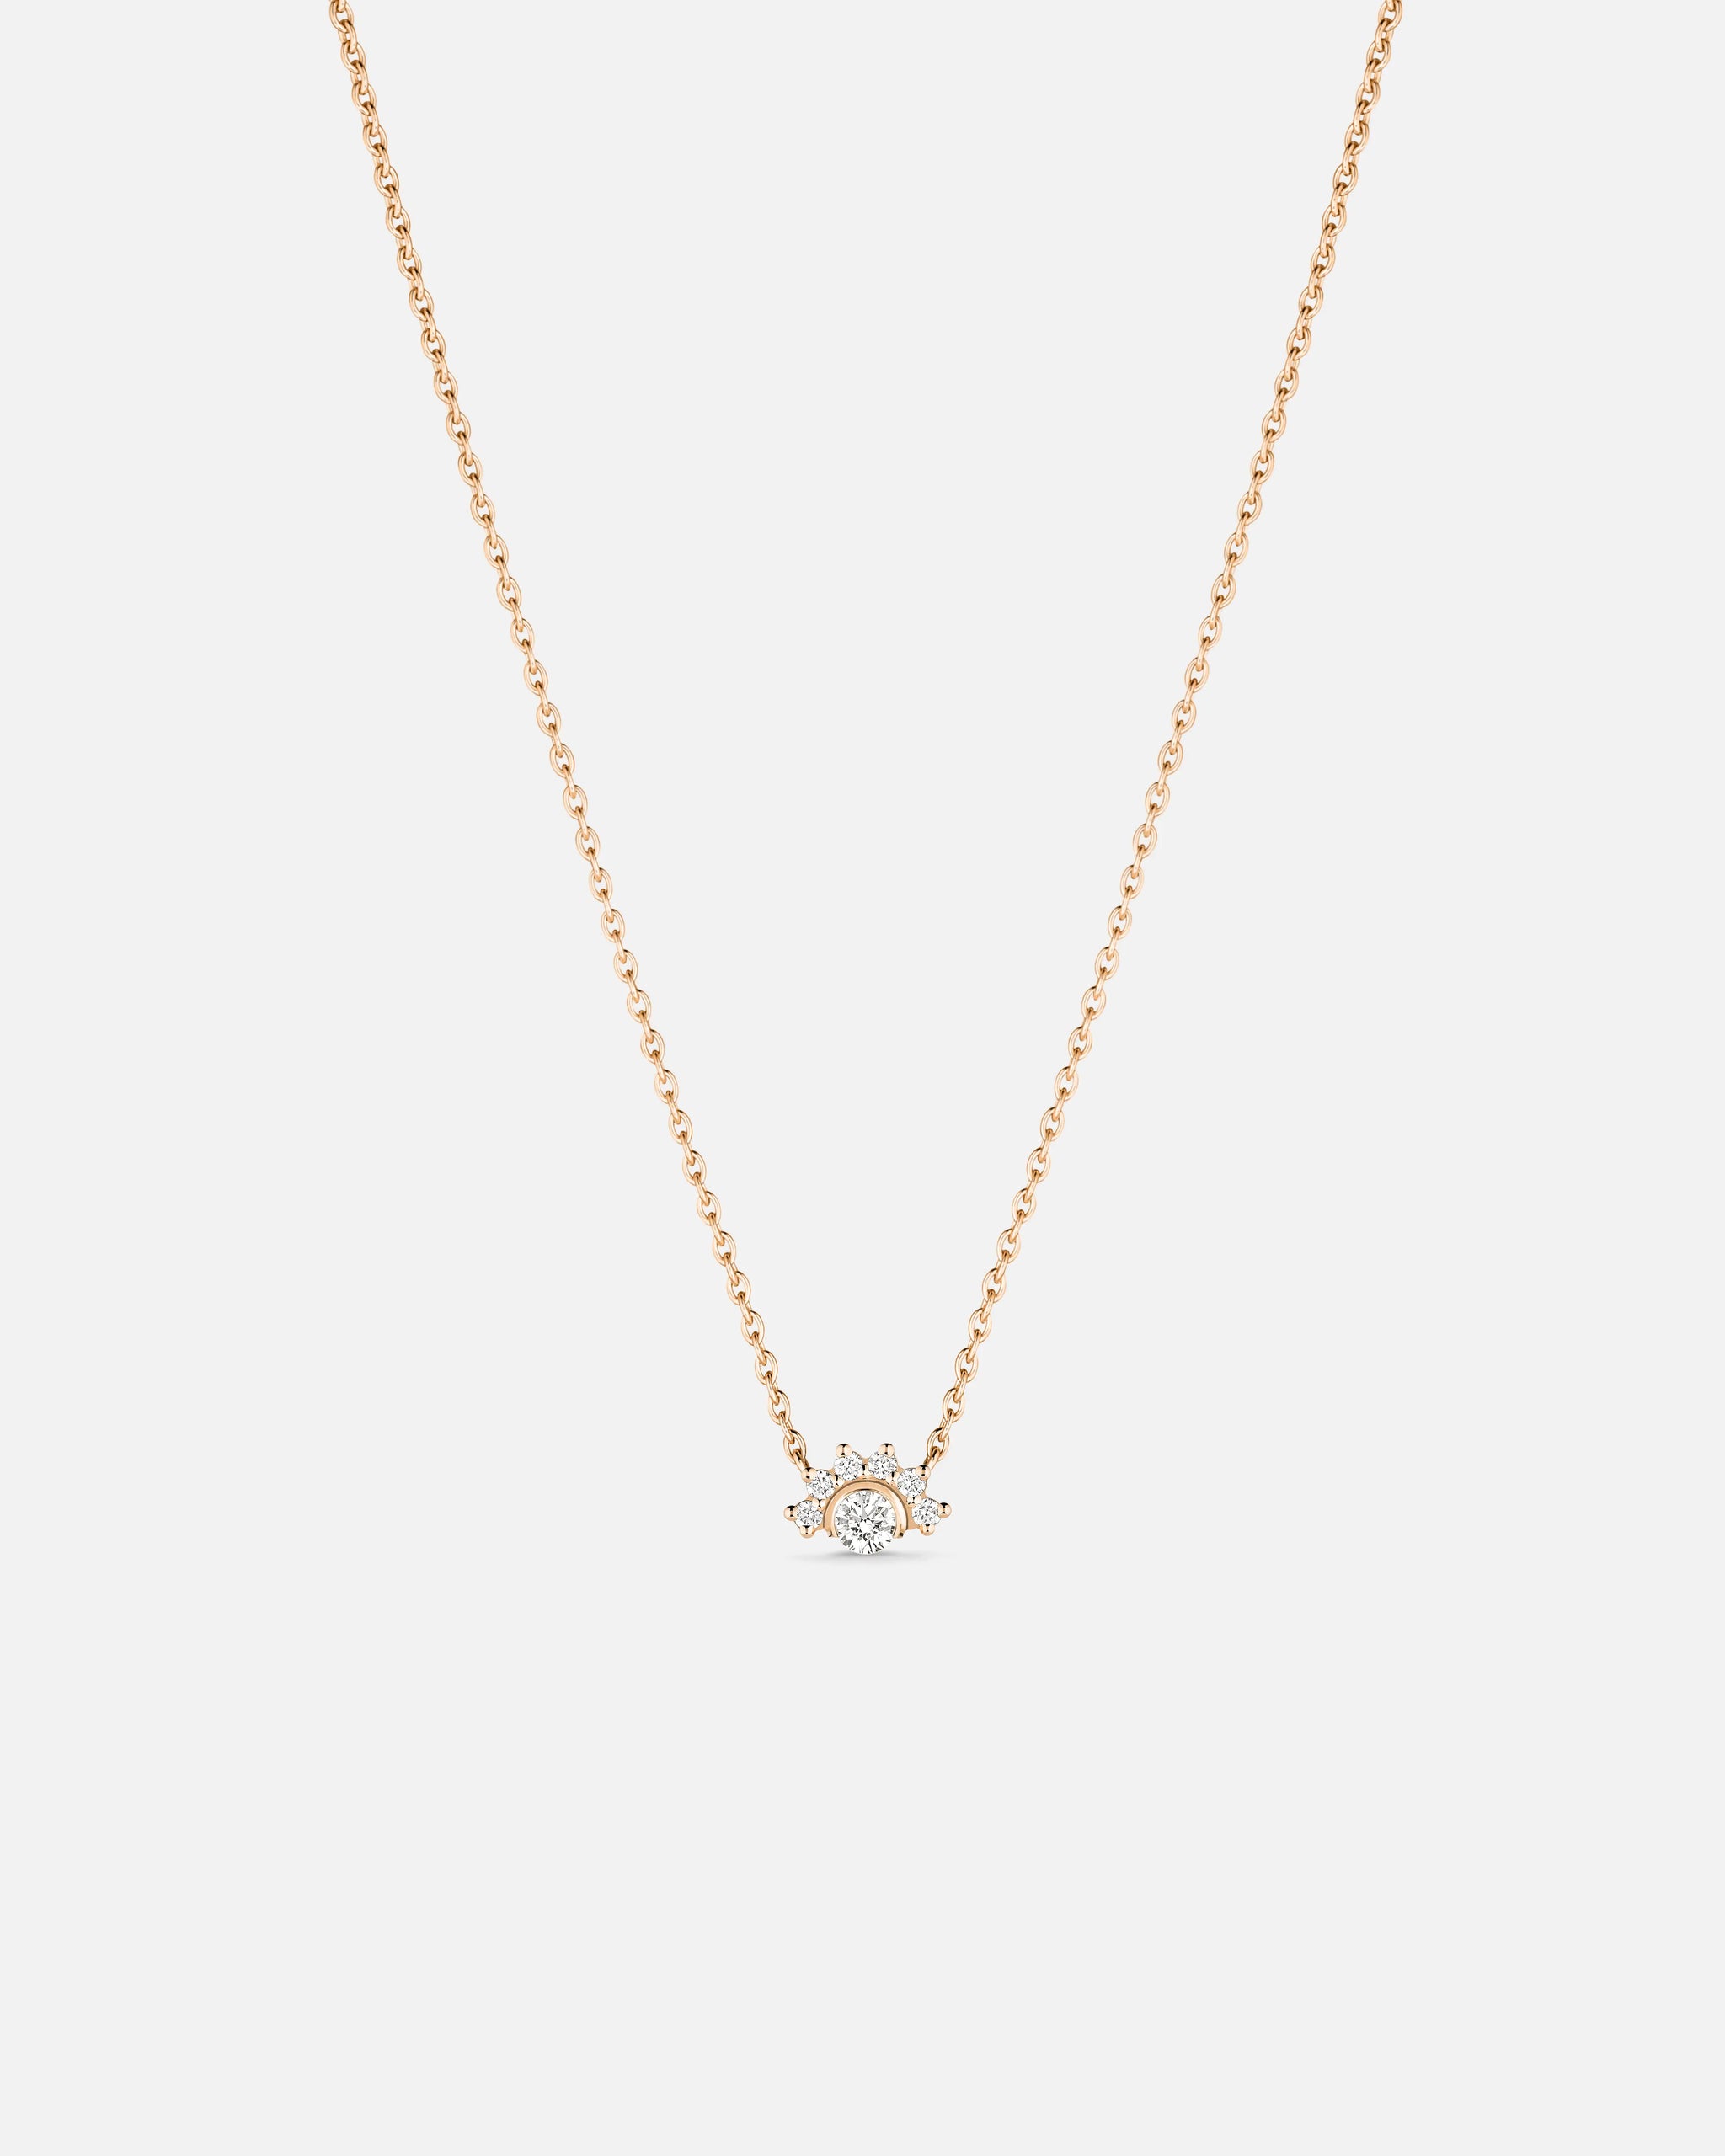 Mystic Diamond Pendant in Rose Gold - 1 - Nouvel Heritage